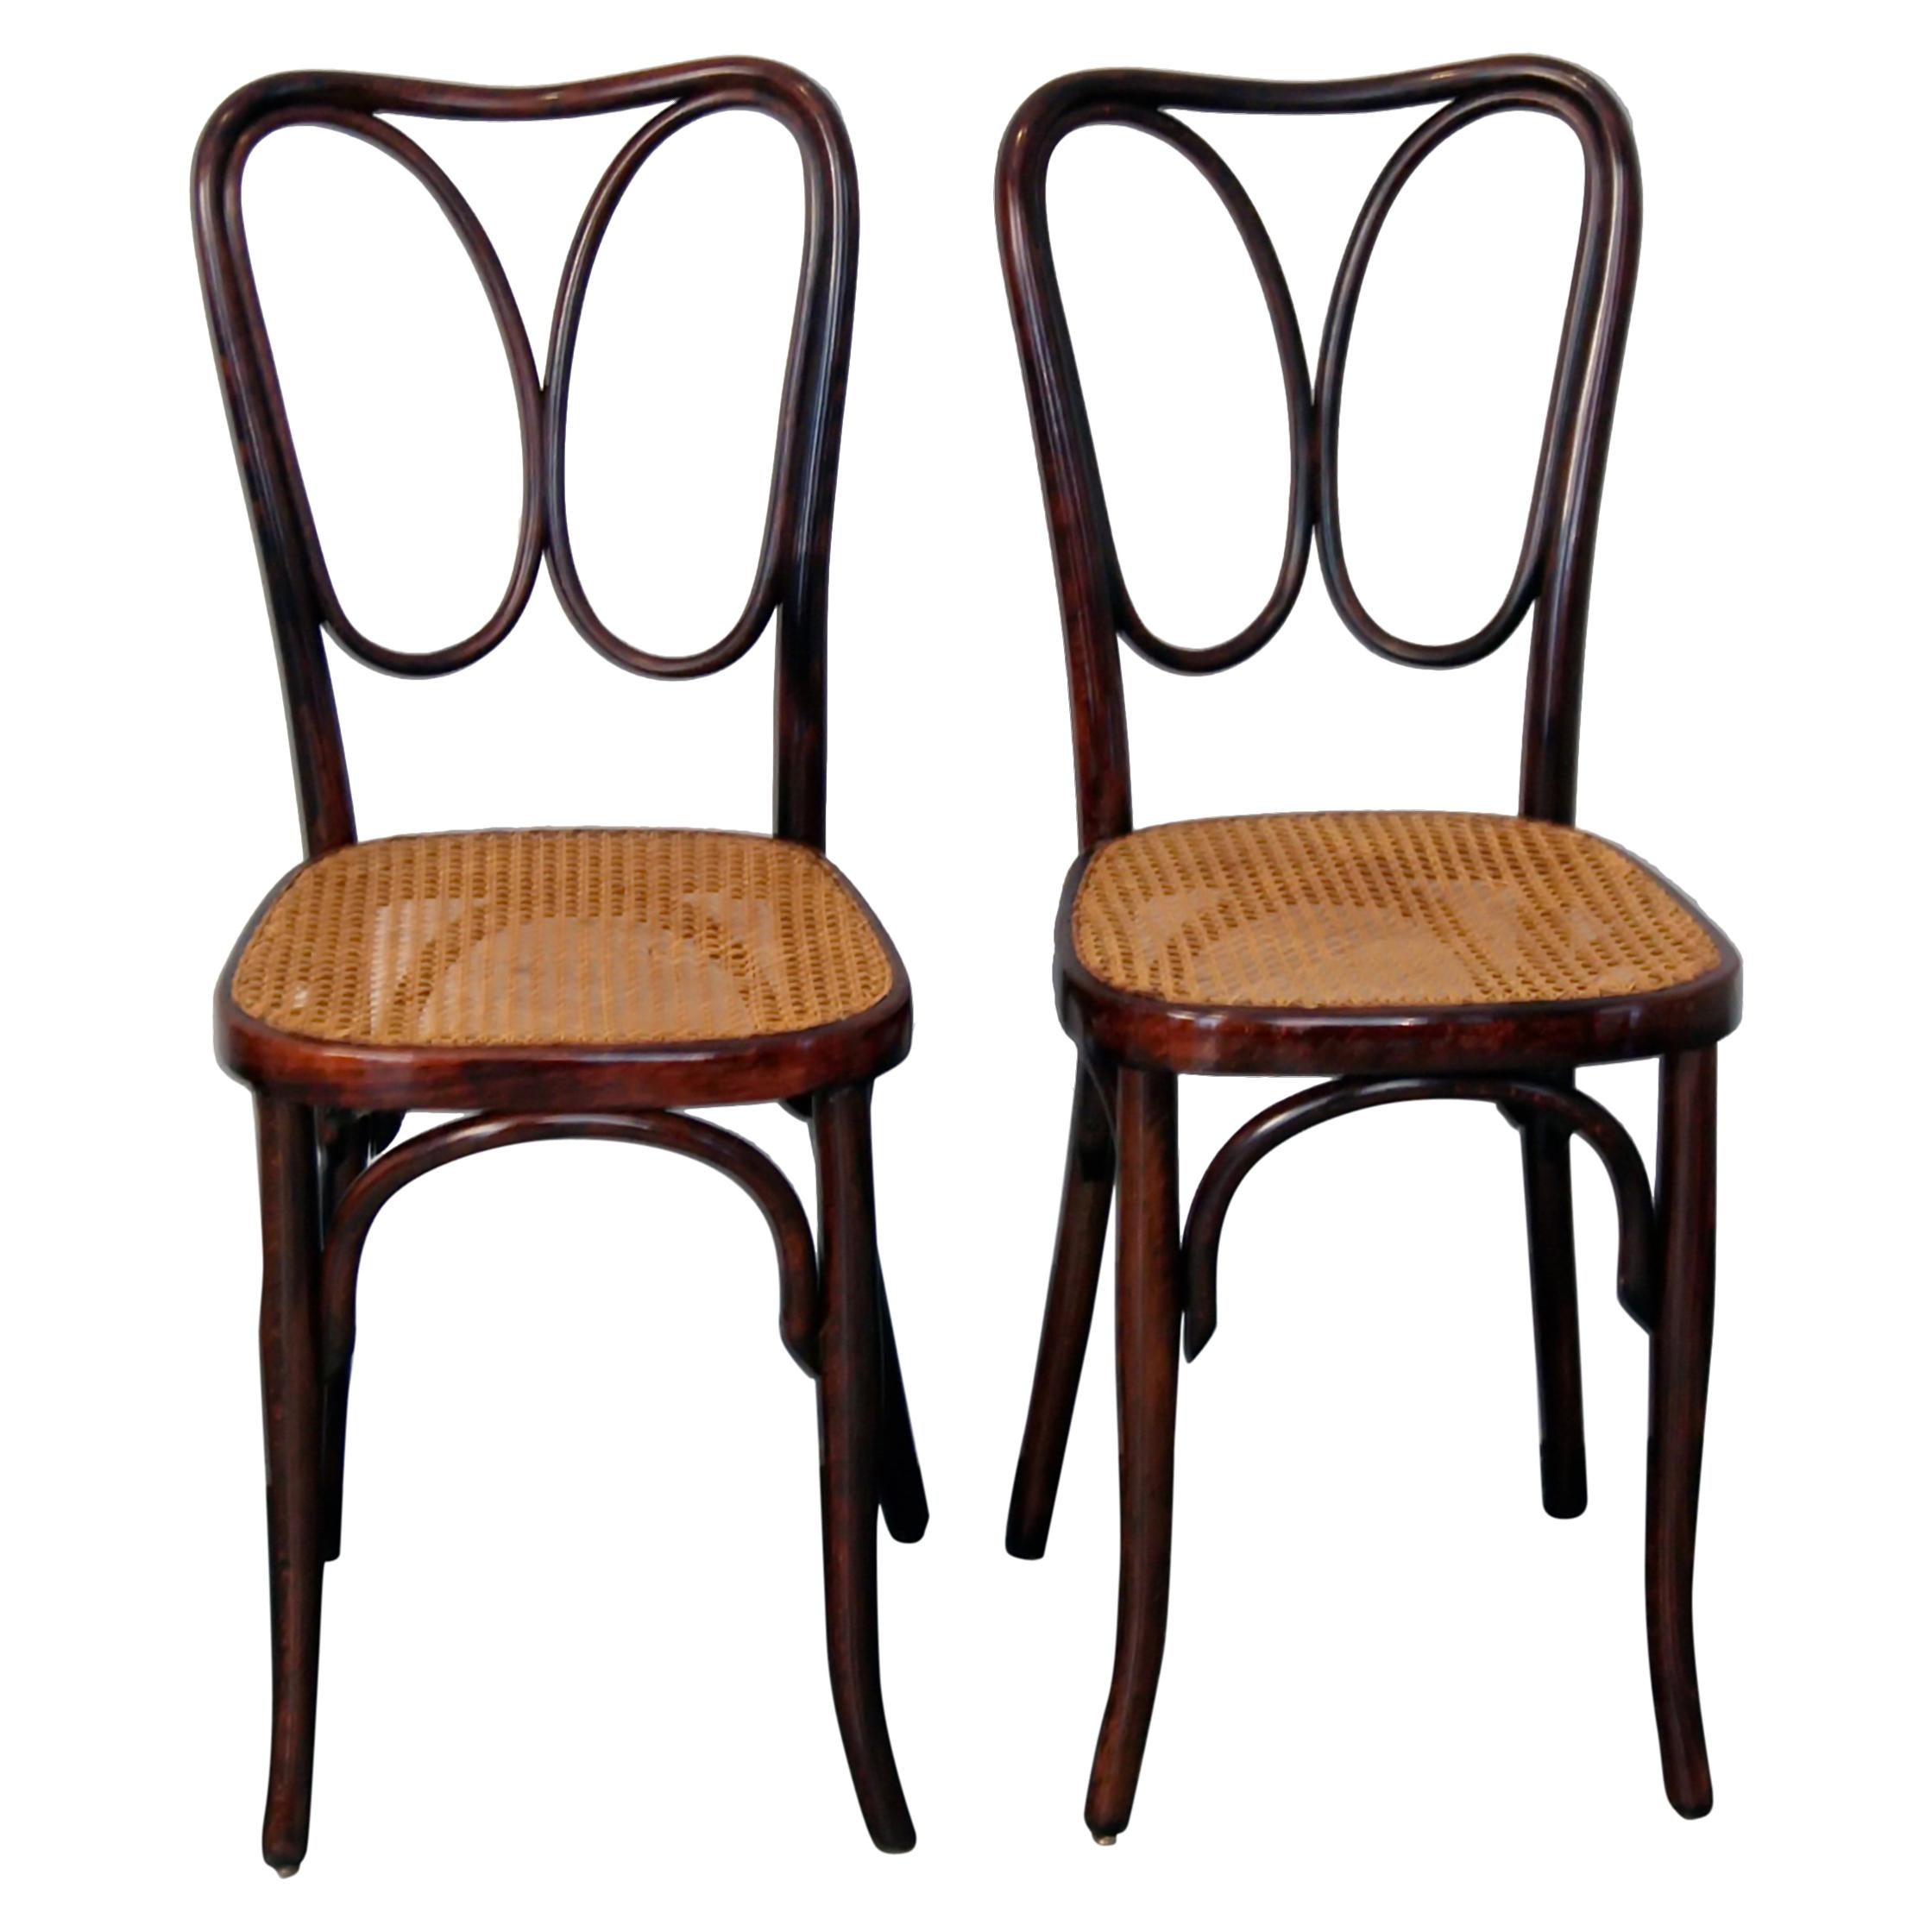 J. & J. Kohn Vienna Art Nouveau Bentwood Two Chairs Nr. 243 Mahogany c.1905